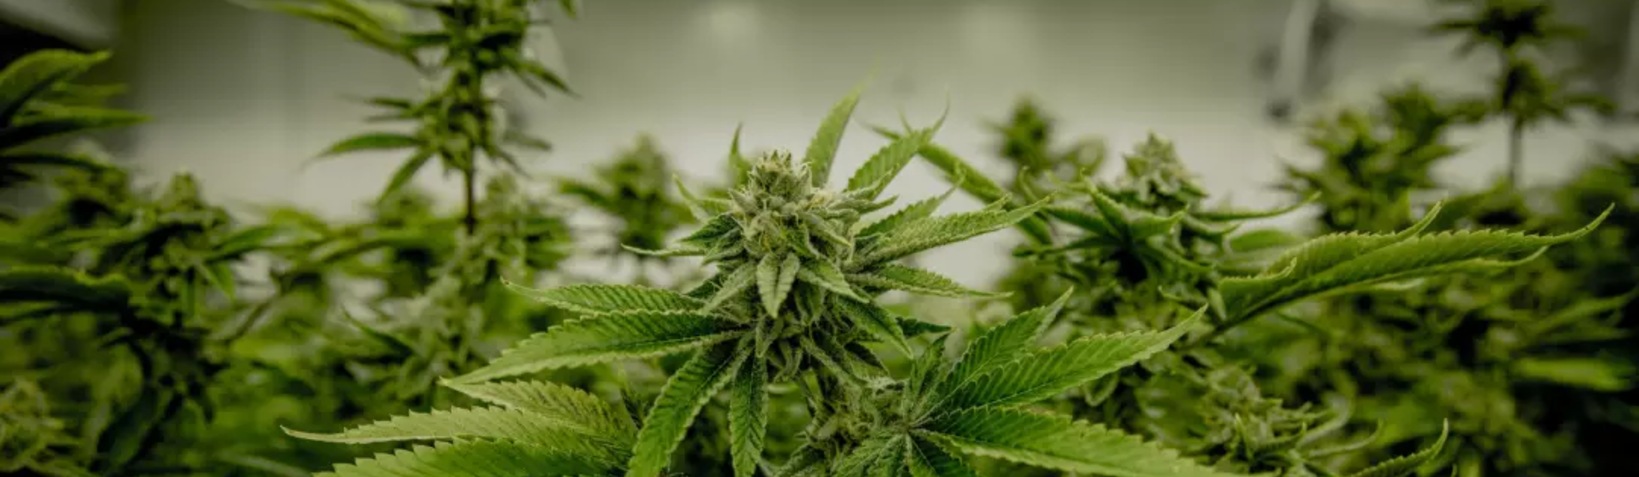 Cultivation of Marijuana – HS 11358